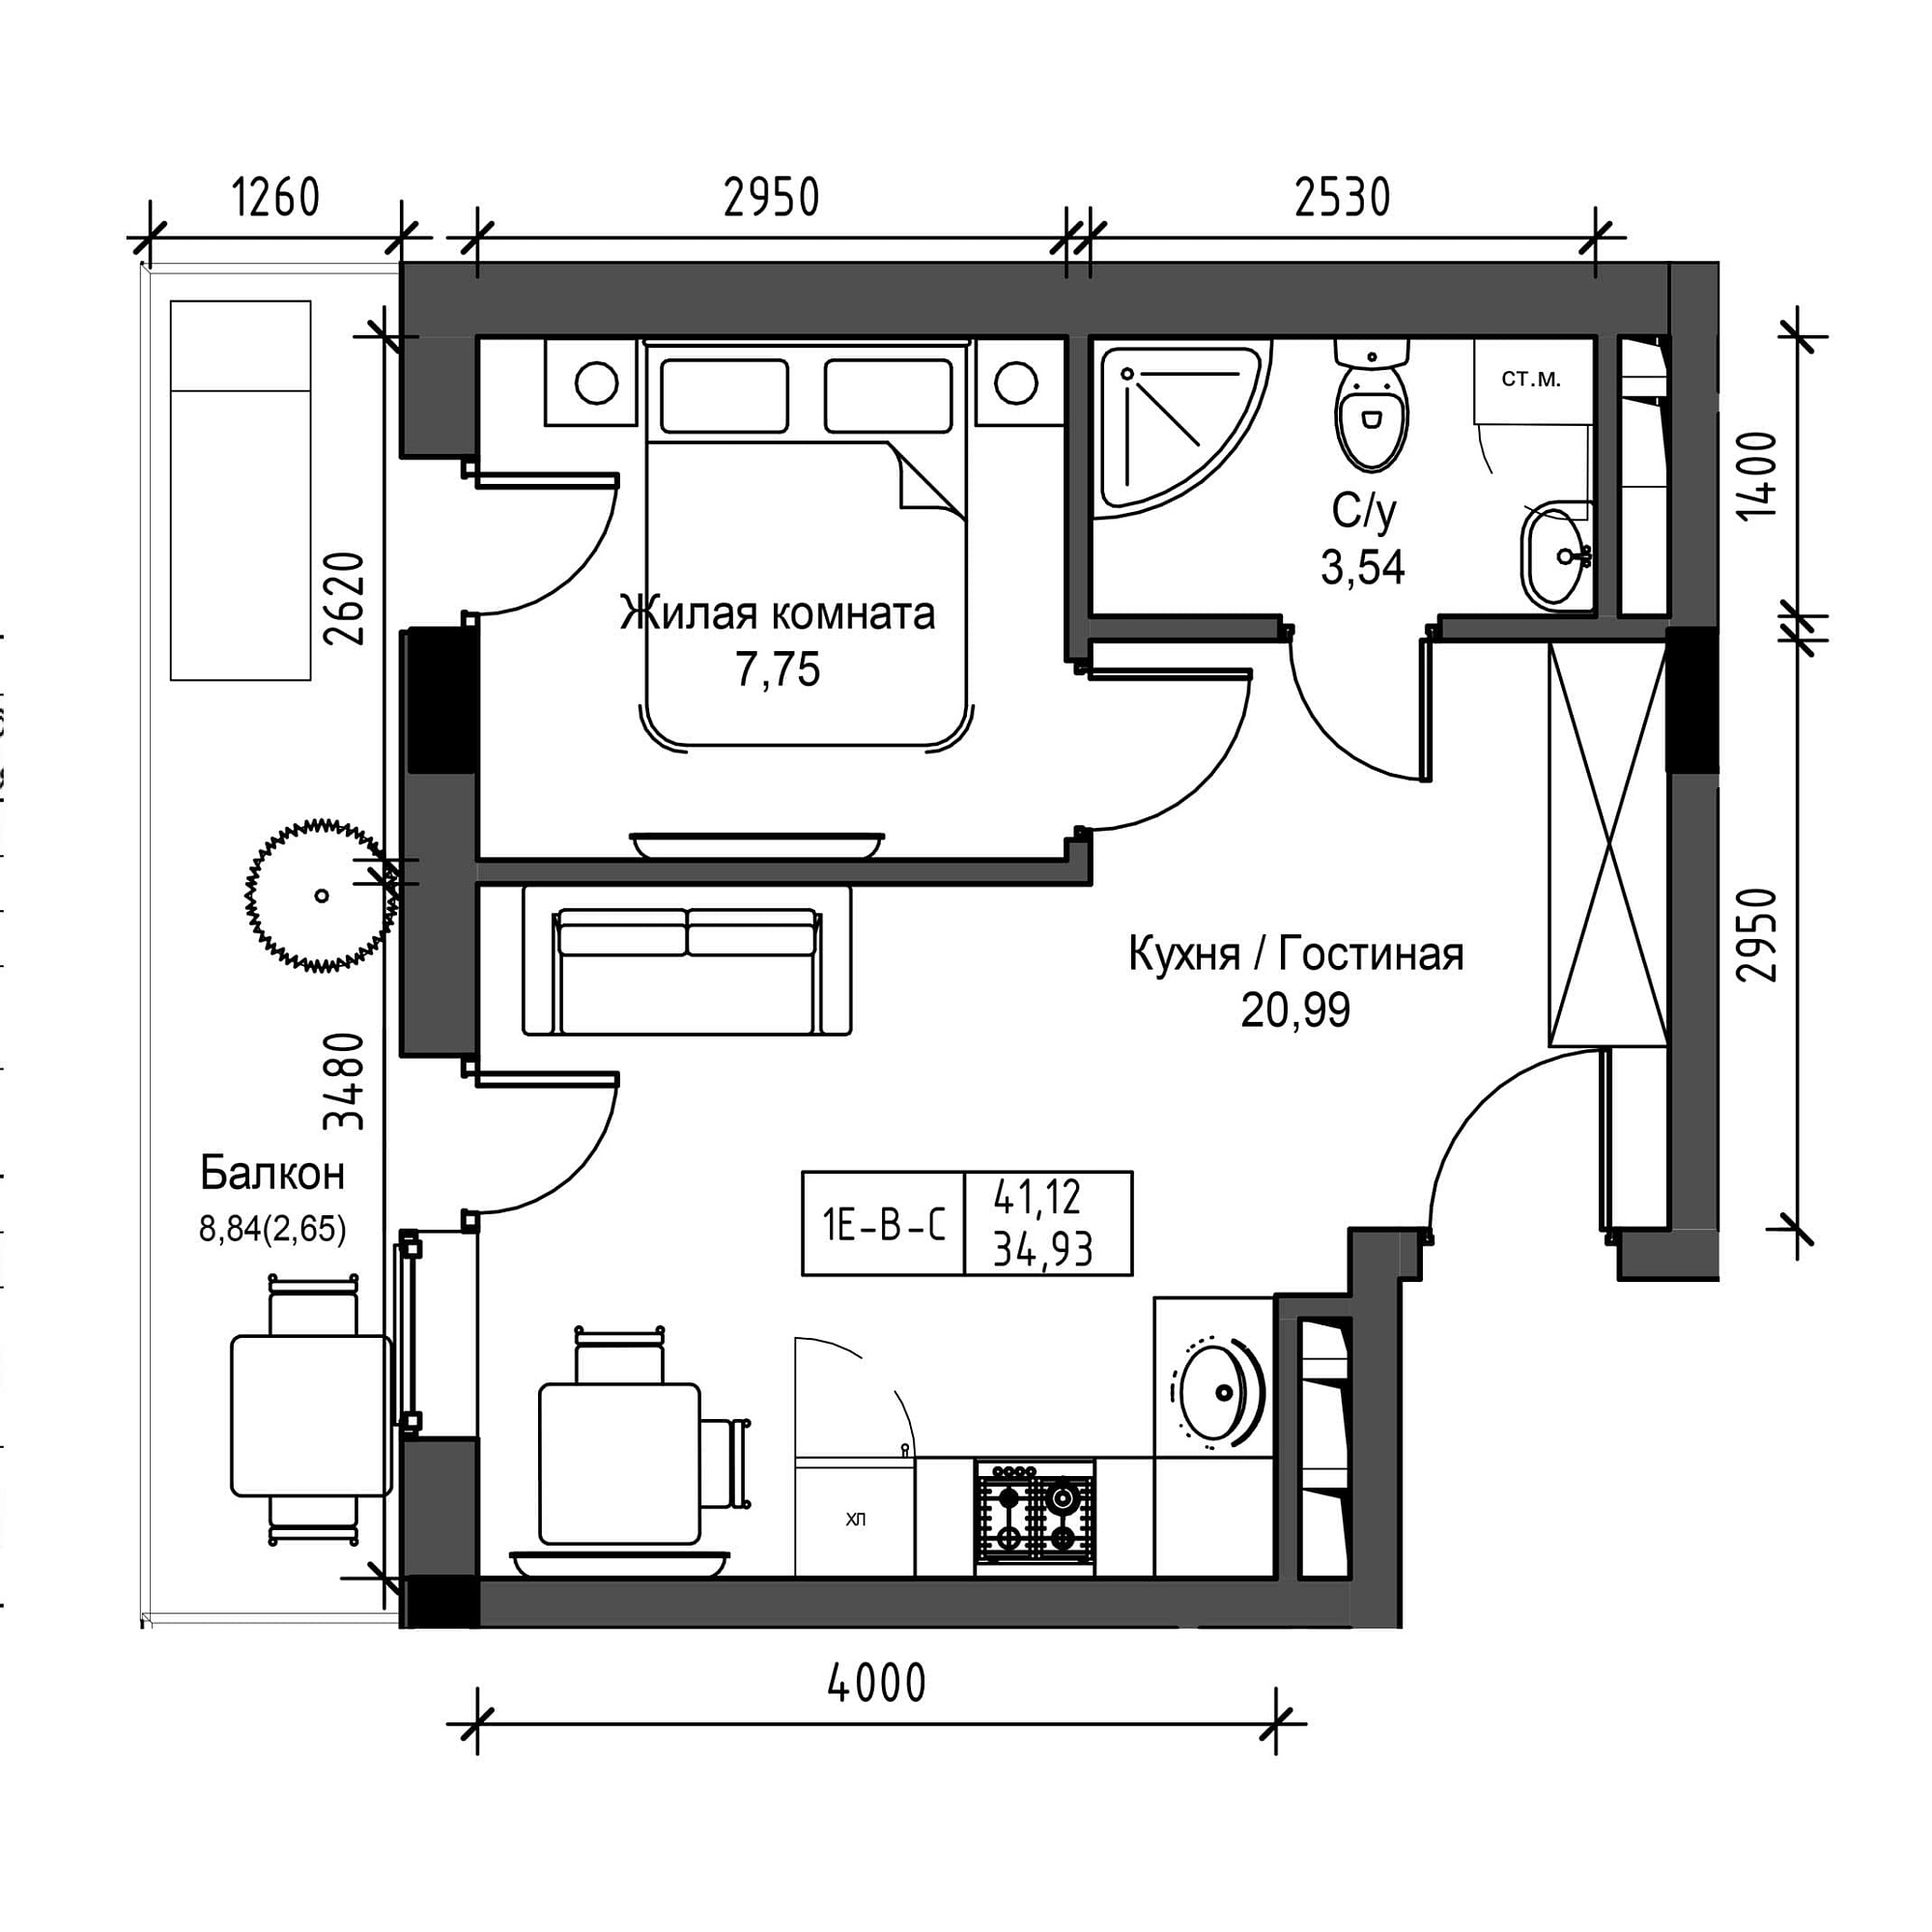 Планування 1-к квартира площею 34.93м2, UM-001-04/0020.